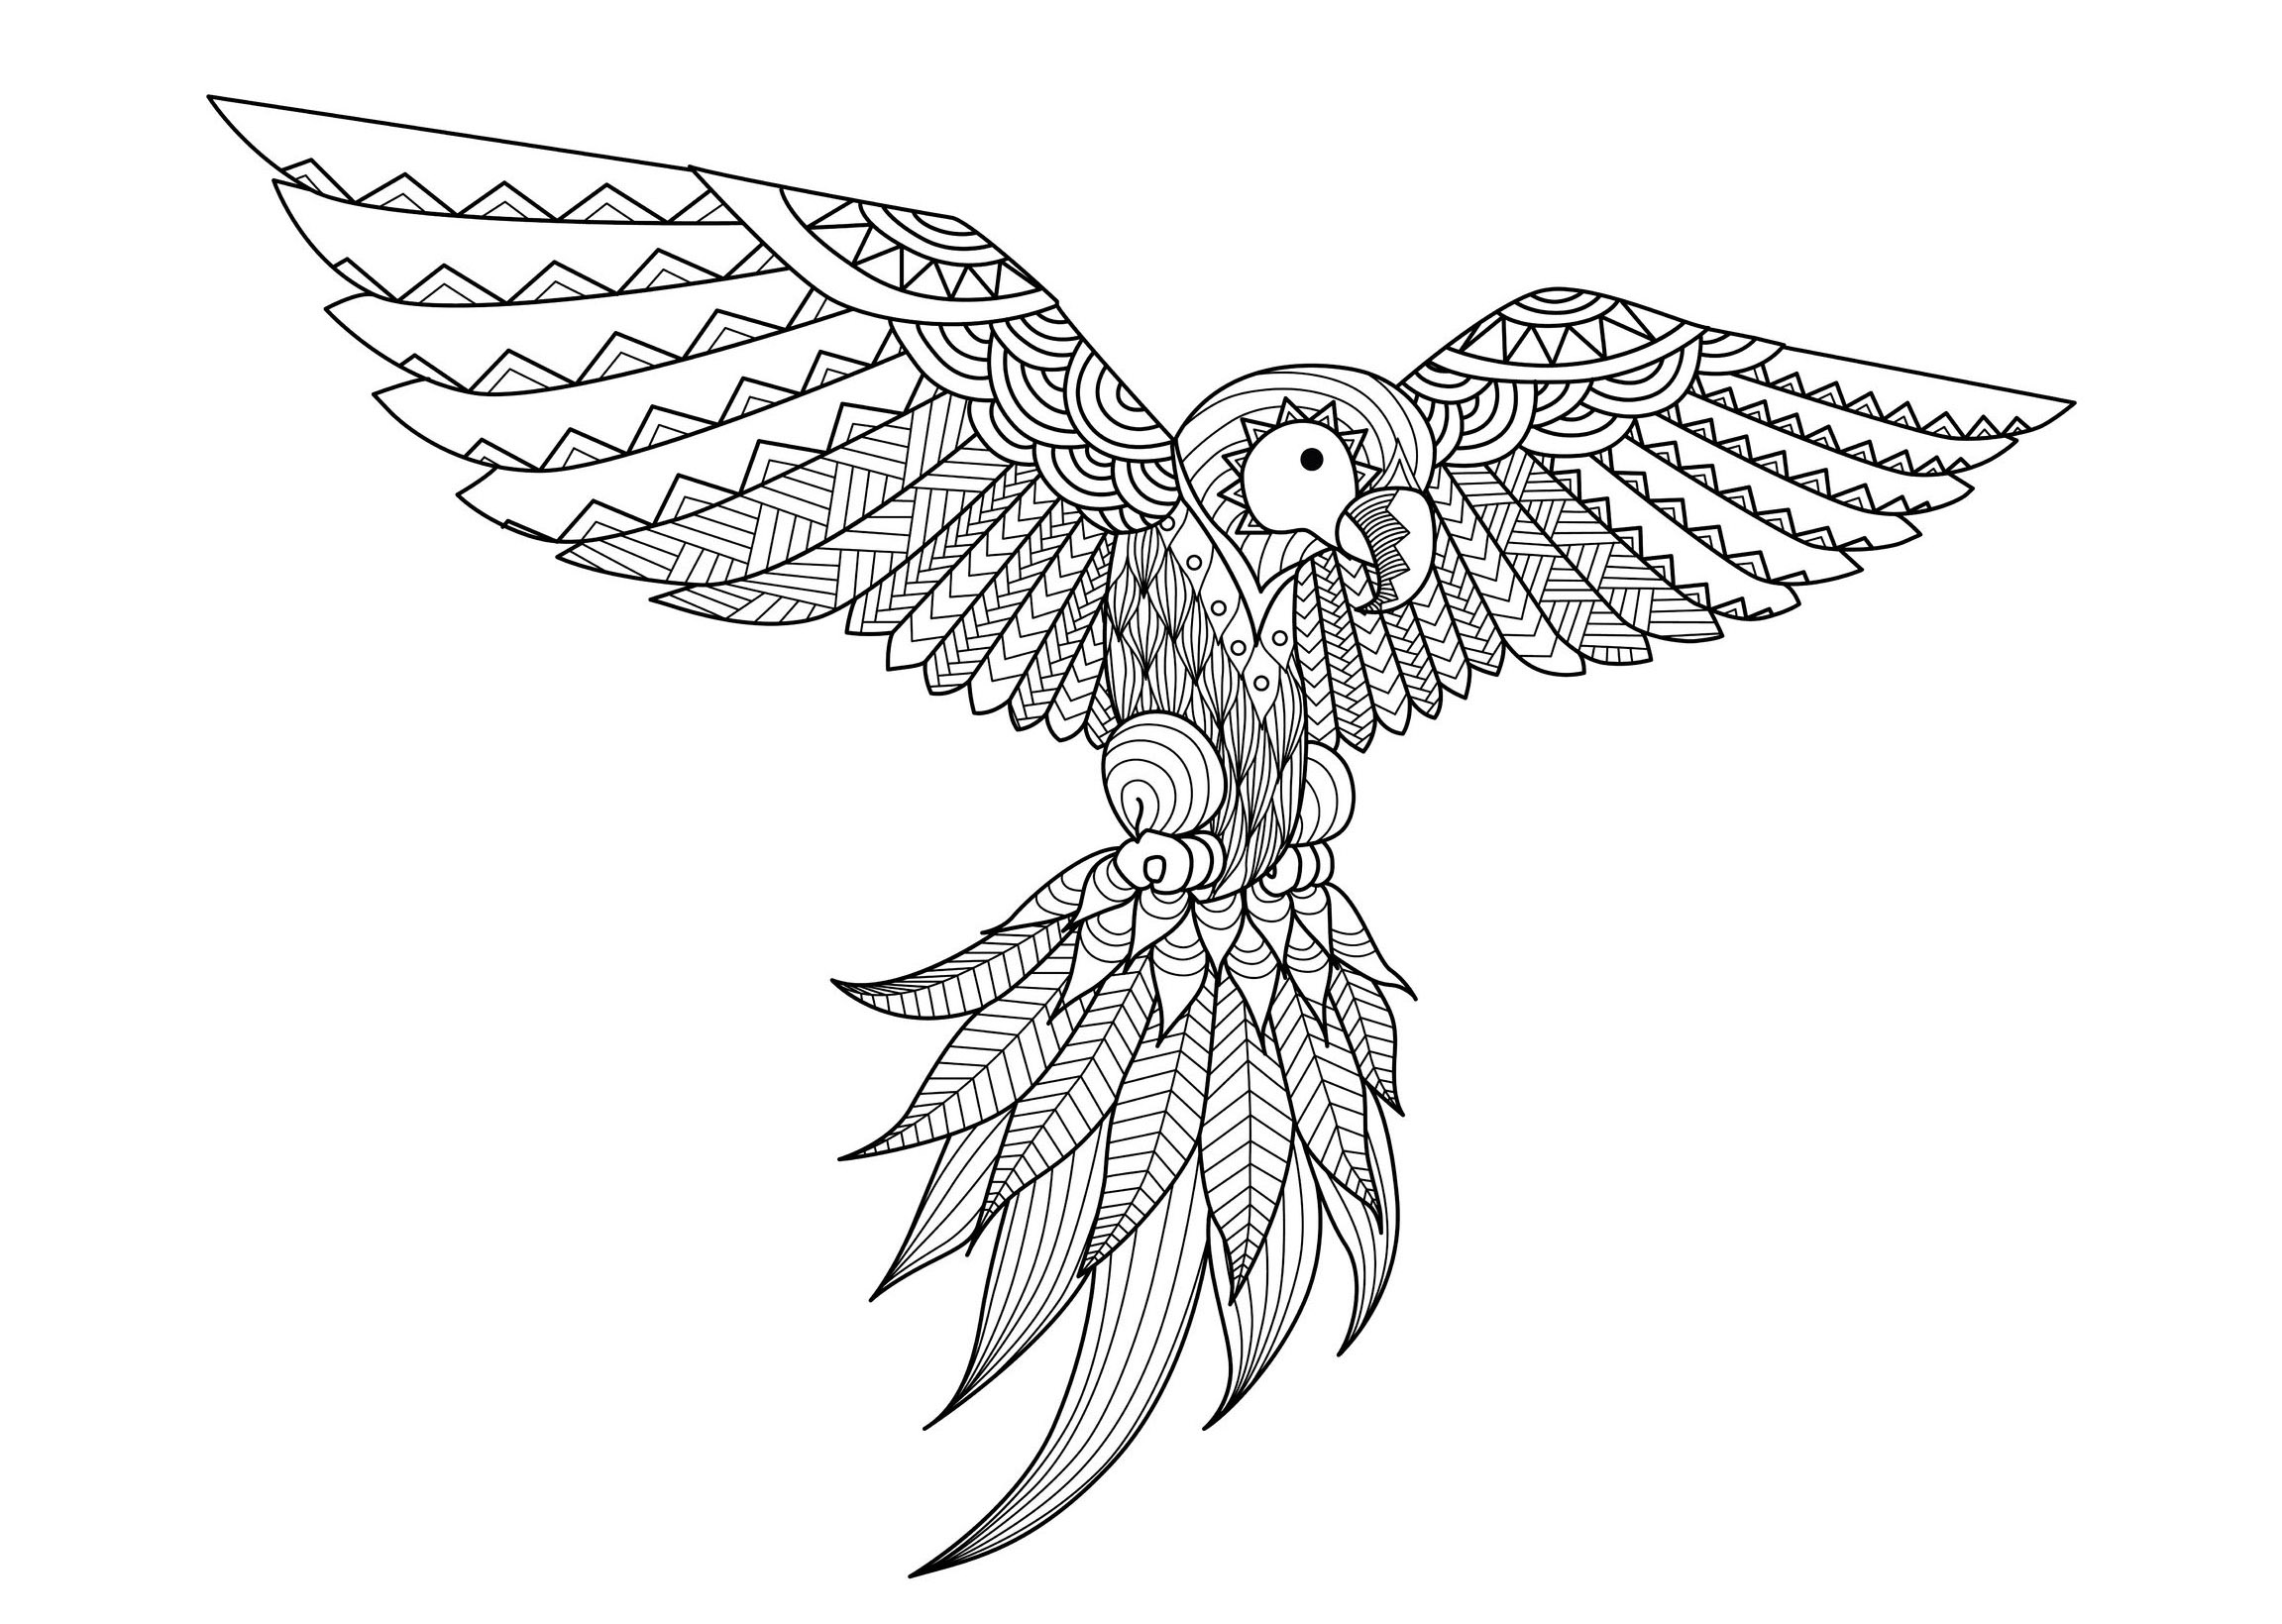 Soberbo desenho do papagaio Zentangle, para ser colorido, por Bimdeedee (fonte: 123rf)